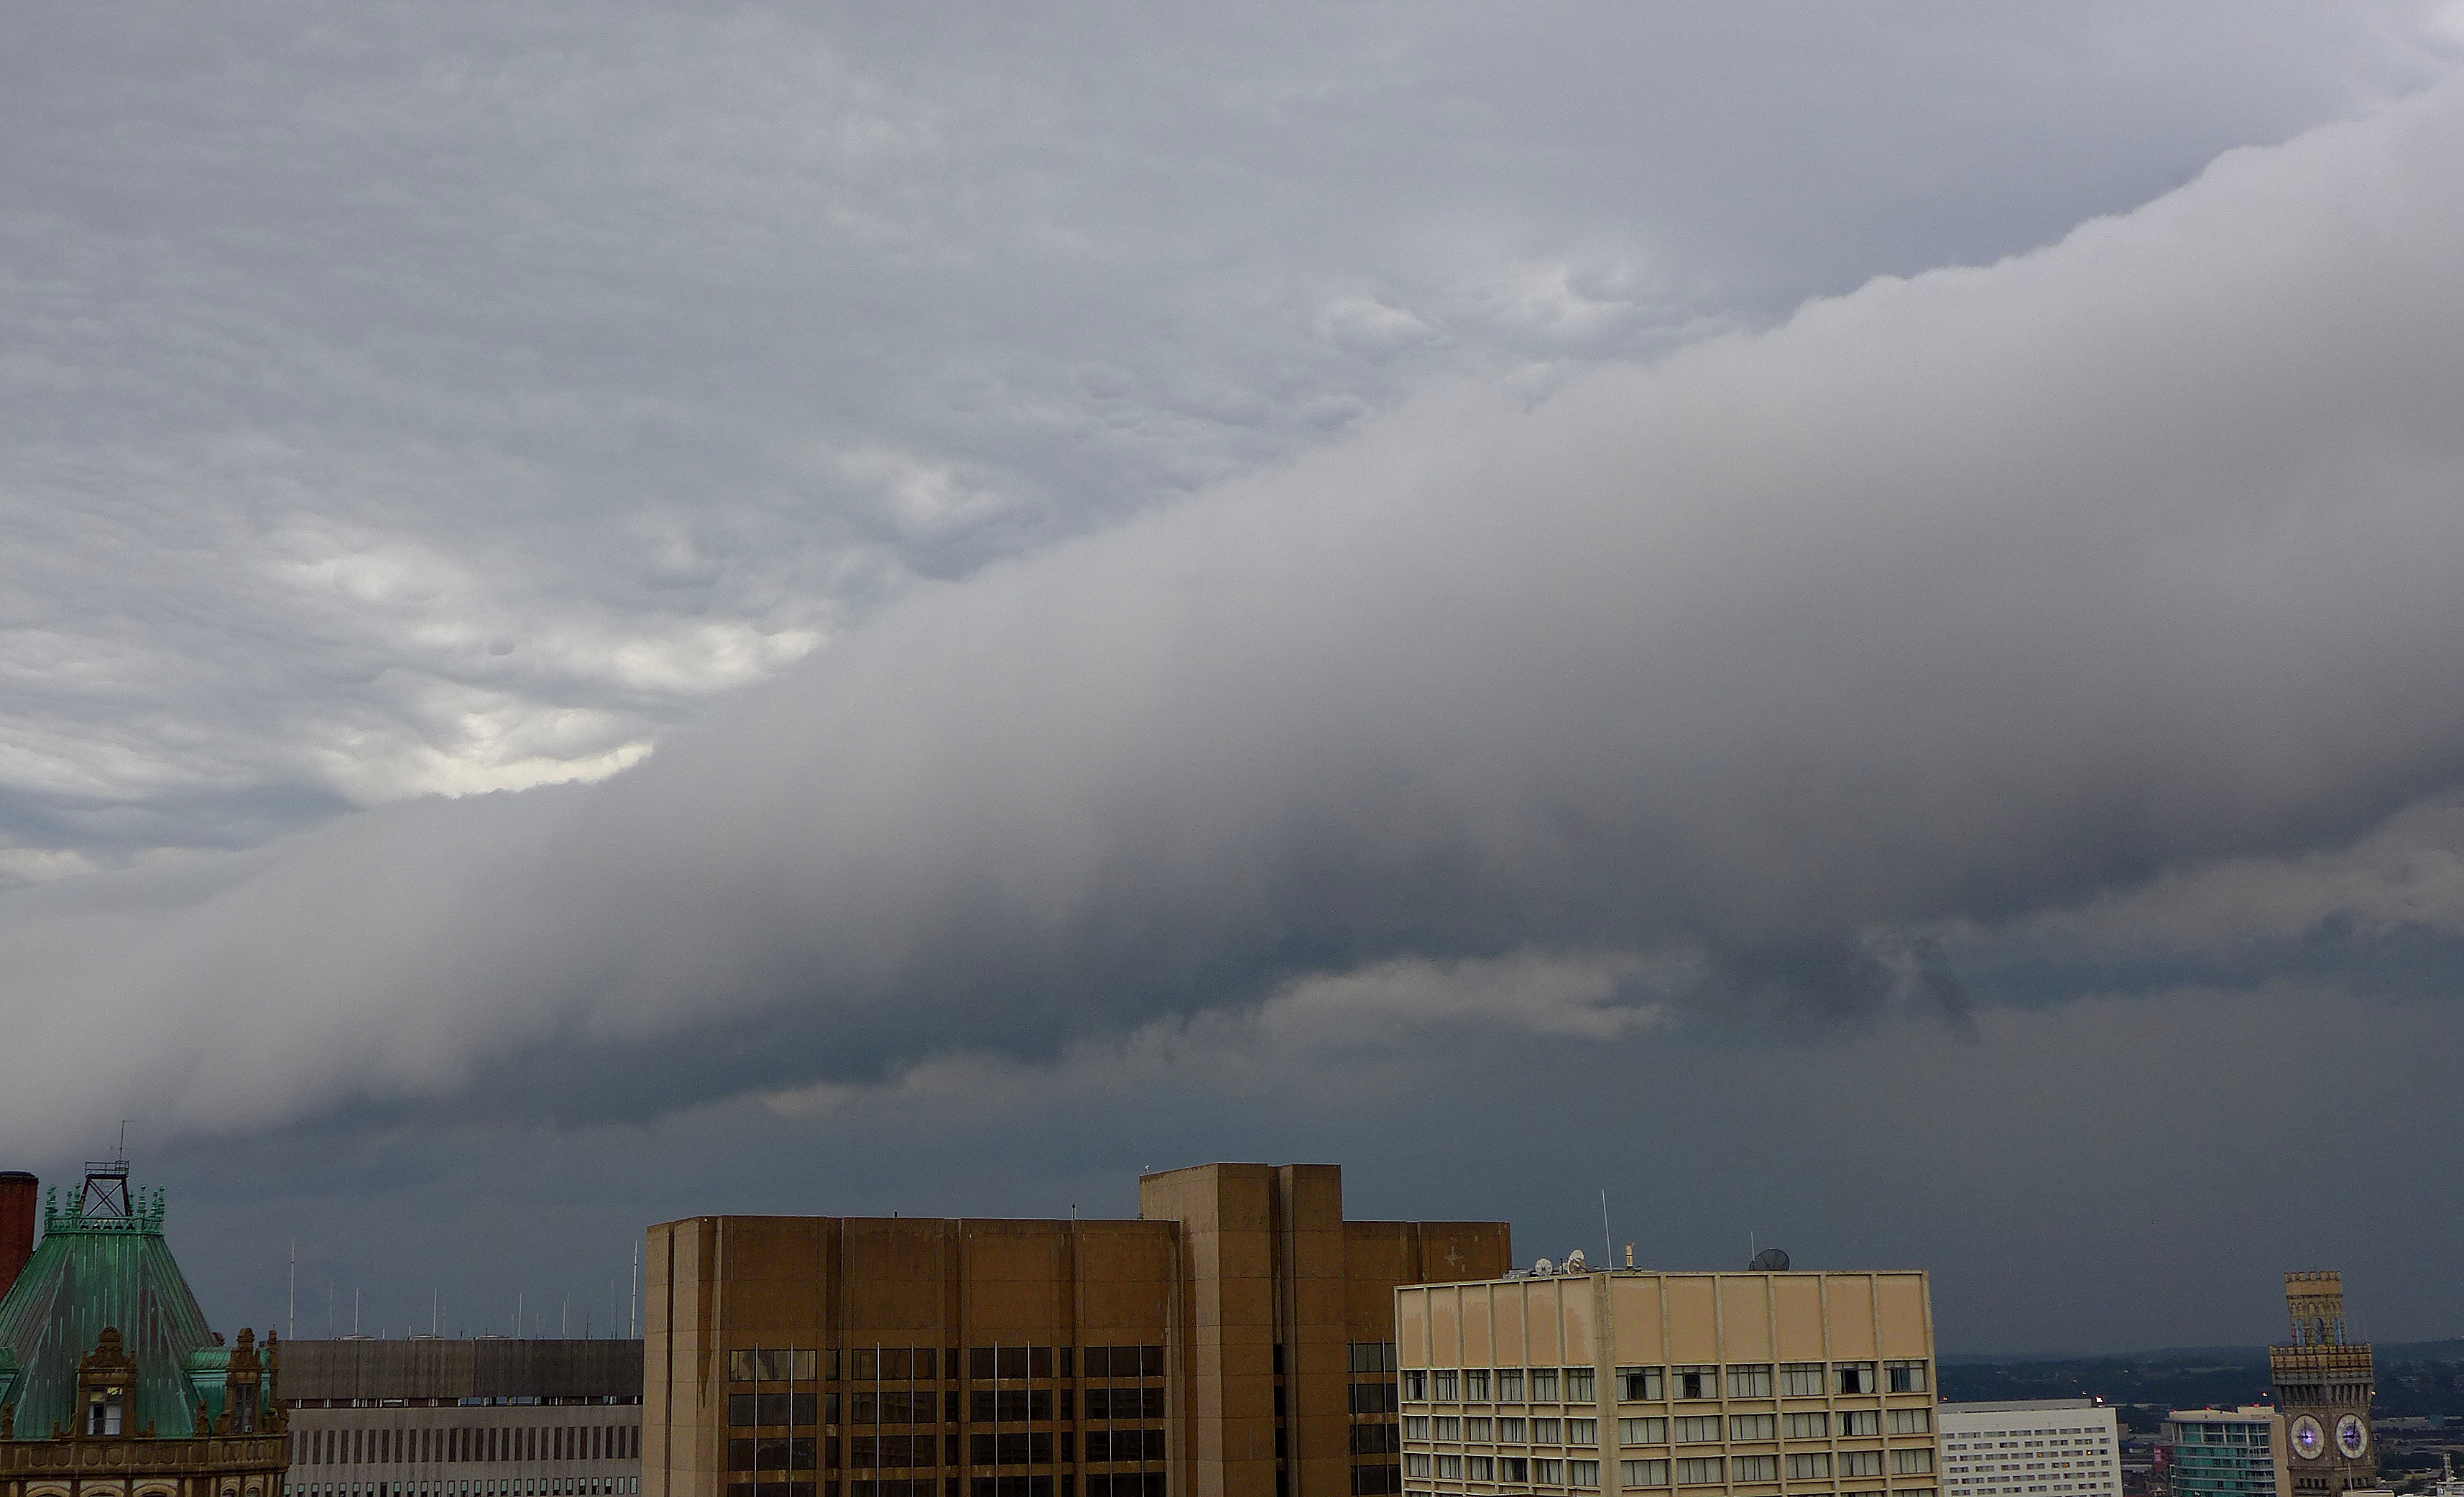 21201: Strange clouds; mean-looking weather radar [photo gallery]